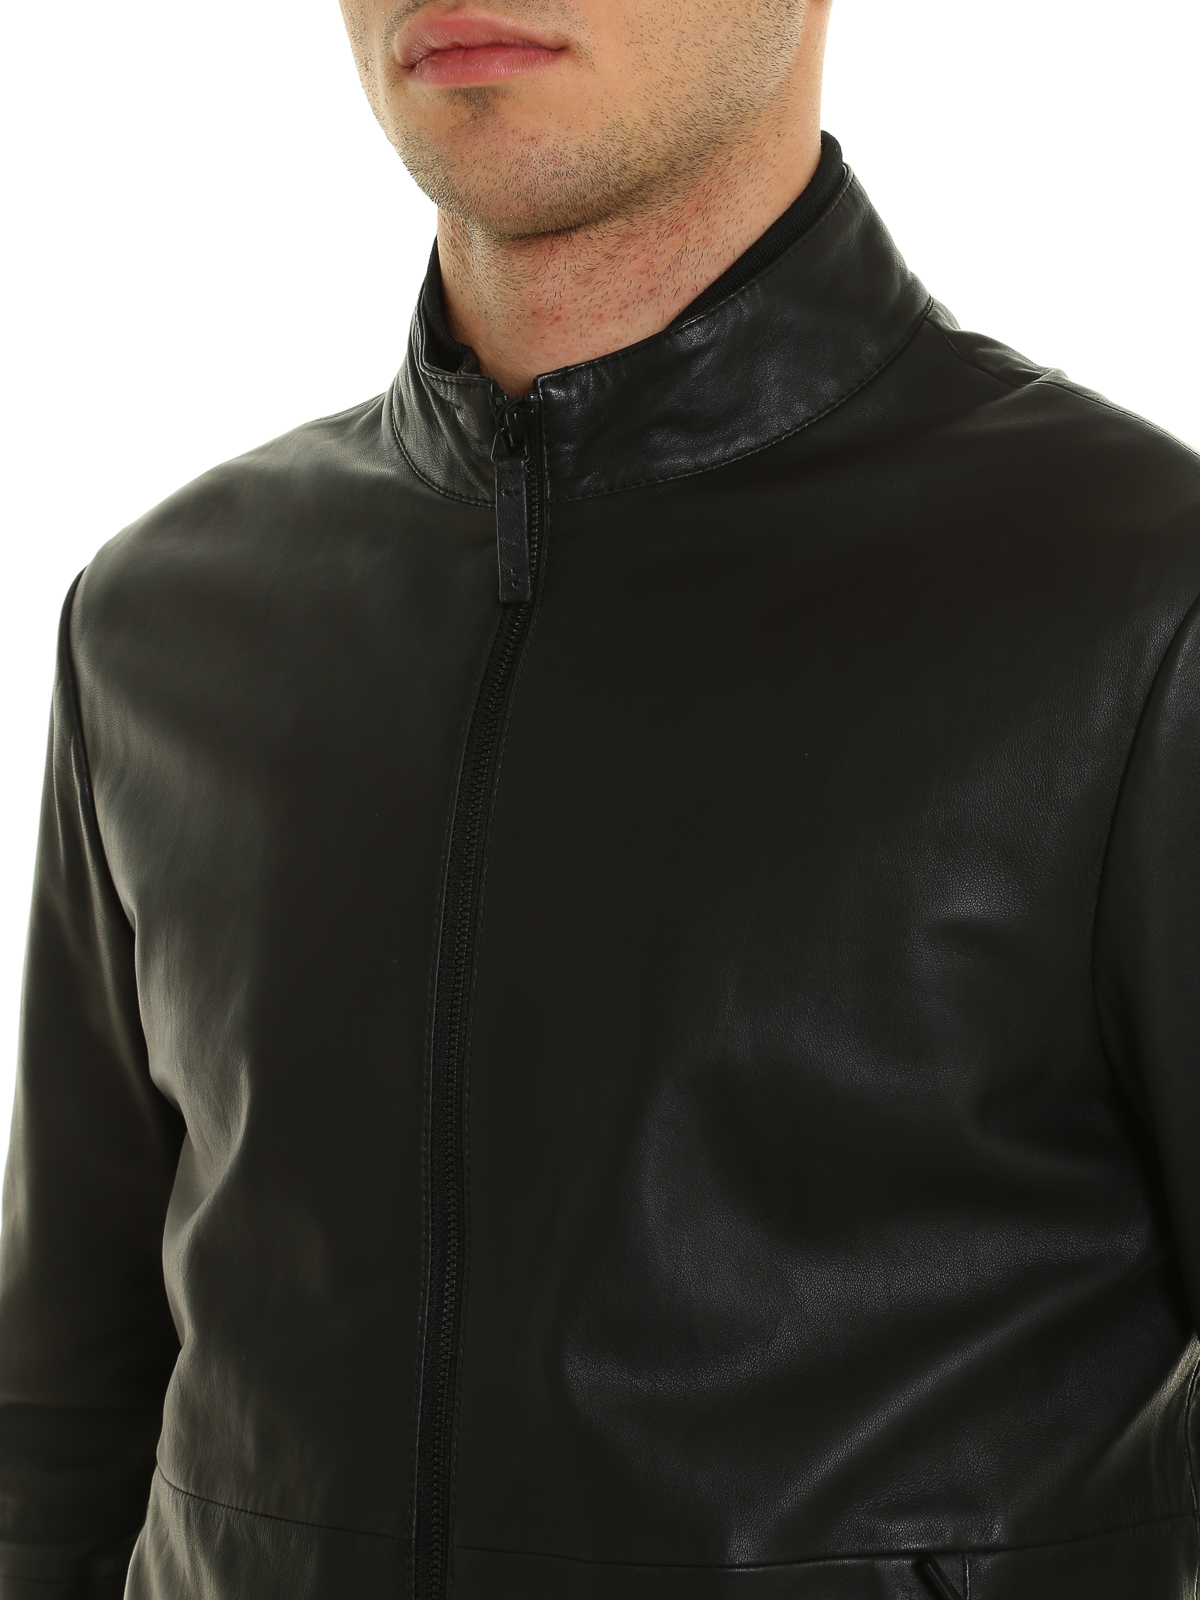 Descubrir 76+ imagen armani collezioni italia leather jacket - Viaterra.mx